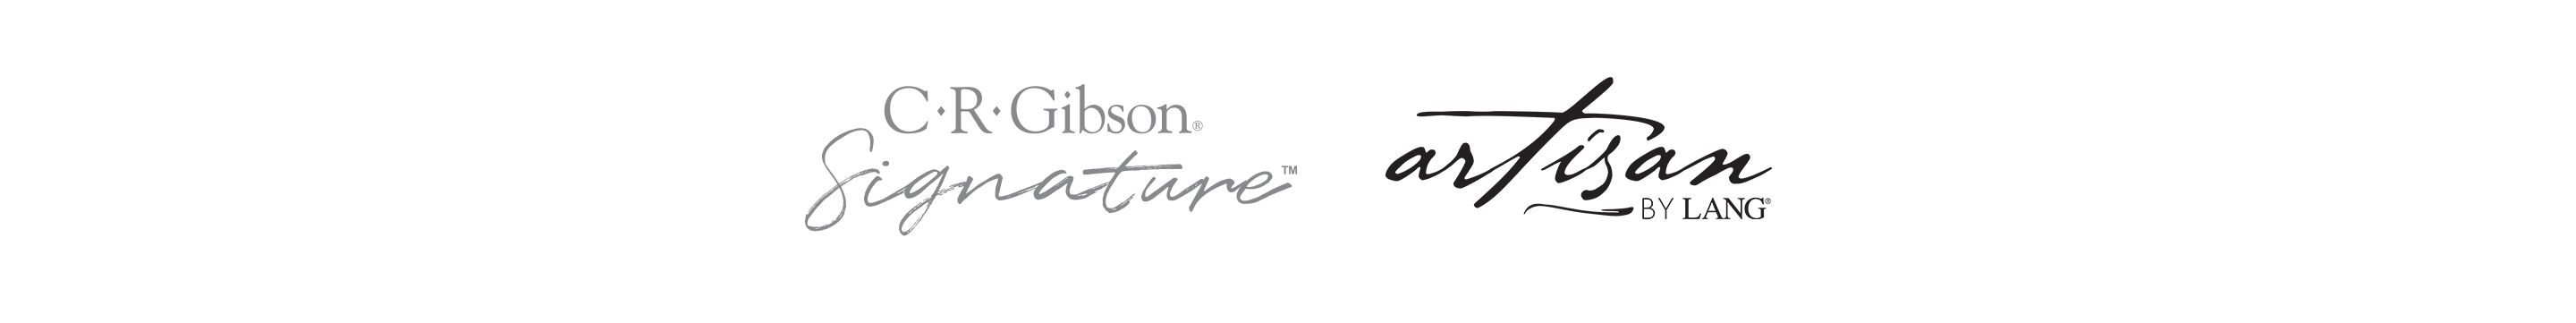 CR Gibson and Artisan by lang logos